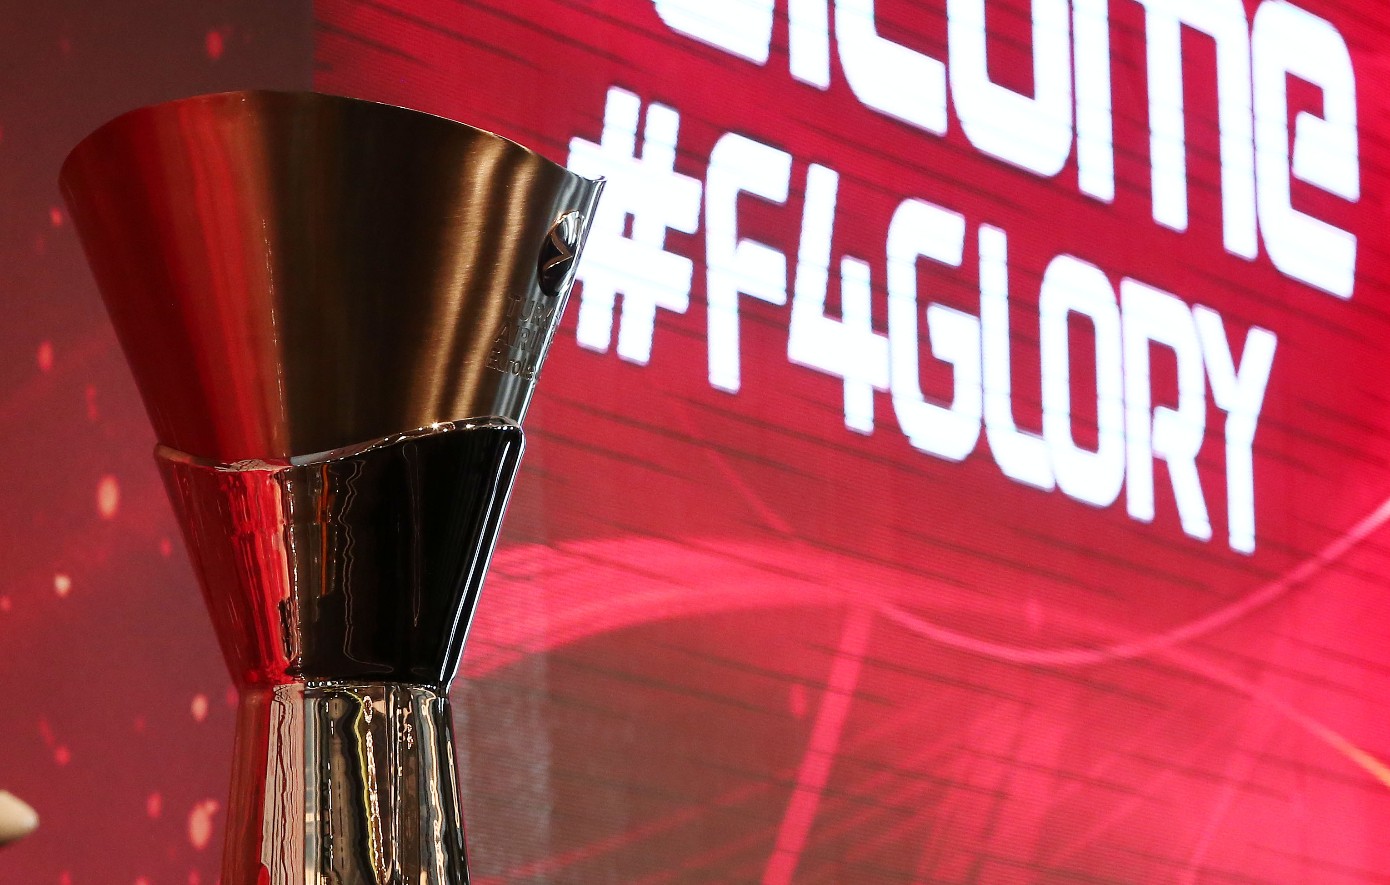 Euroleague: Έμεινε μόνο με&#8230; 27 ακόλουθους στο Twitter παραμονή του Final 4